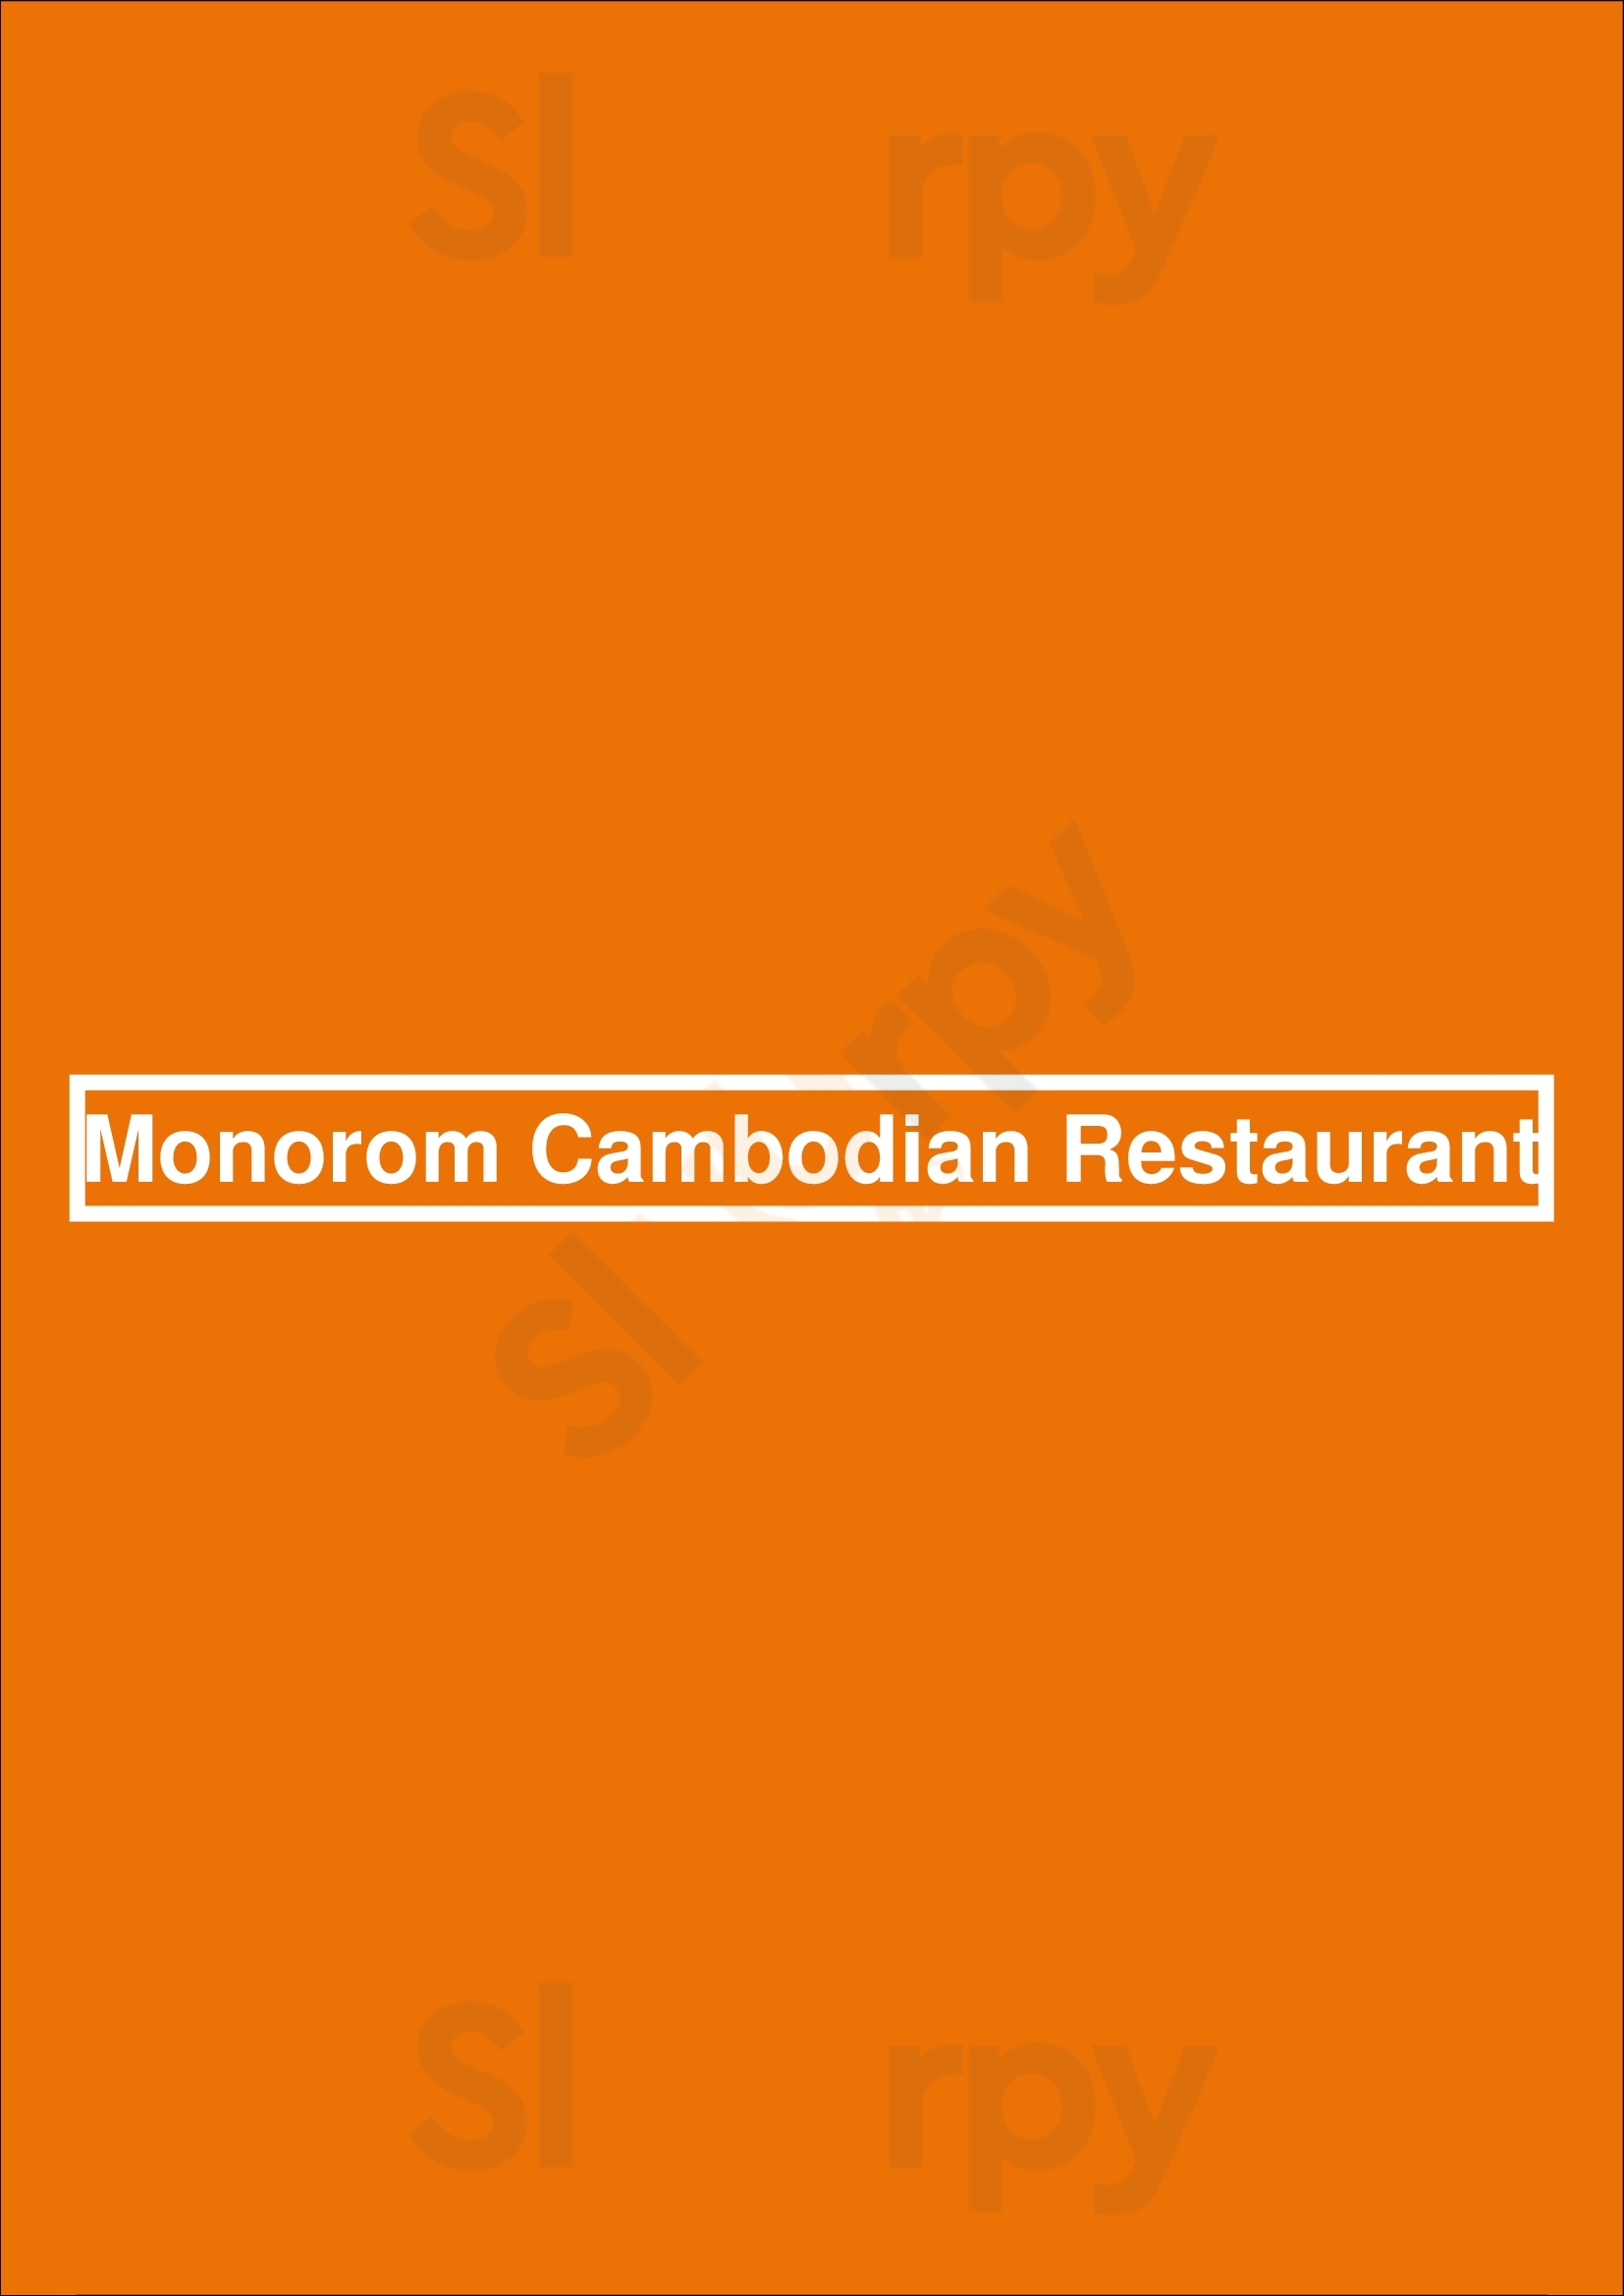 Monorom Cambodian Restaurant Long Beach Menu - 1